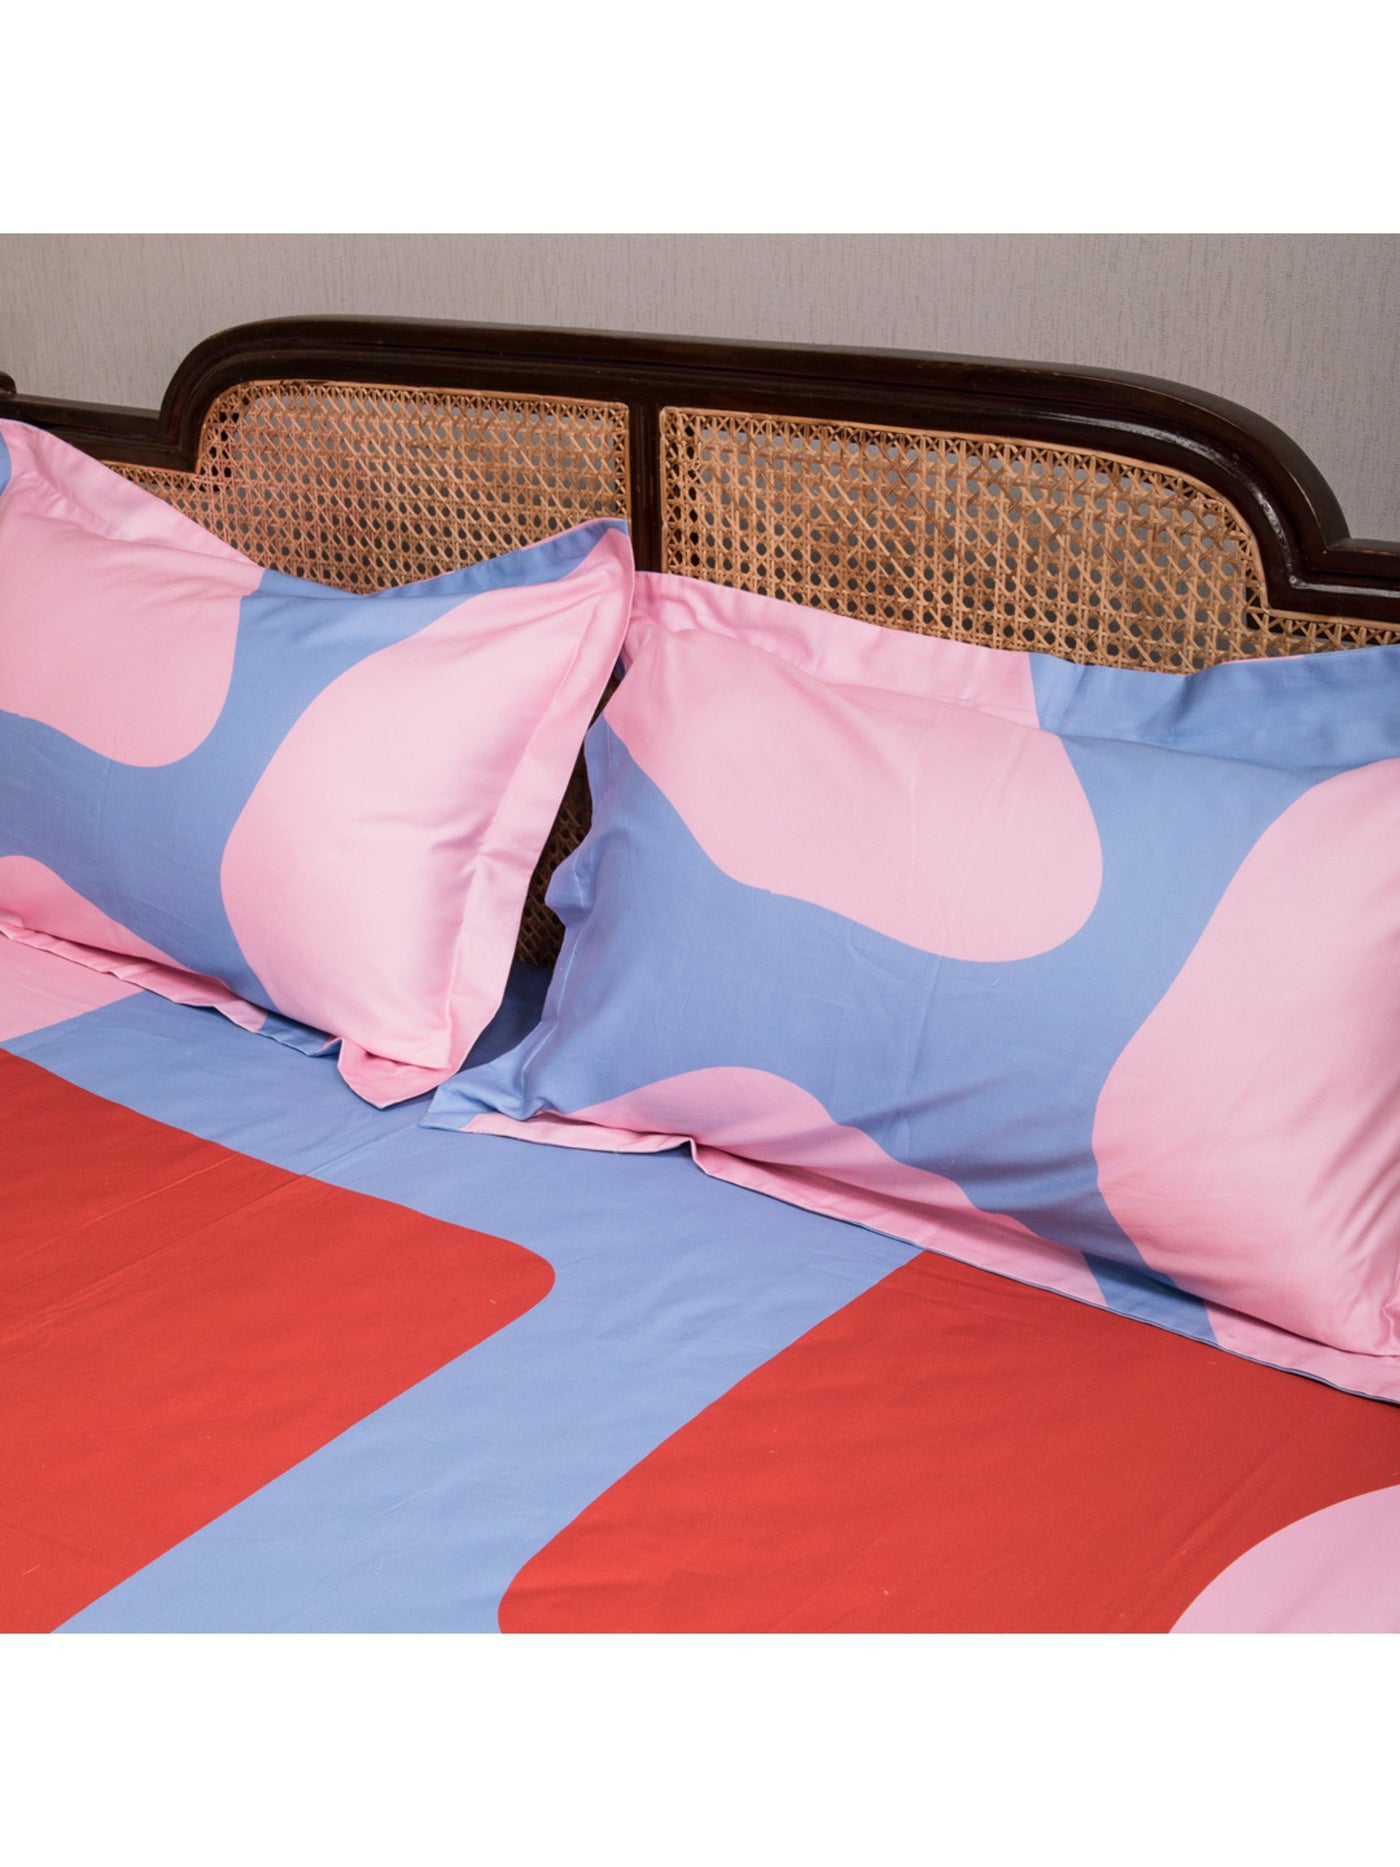 Bedsheet - The Matisse Meets Memphis In Red & Blue Copy